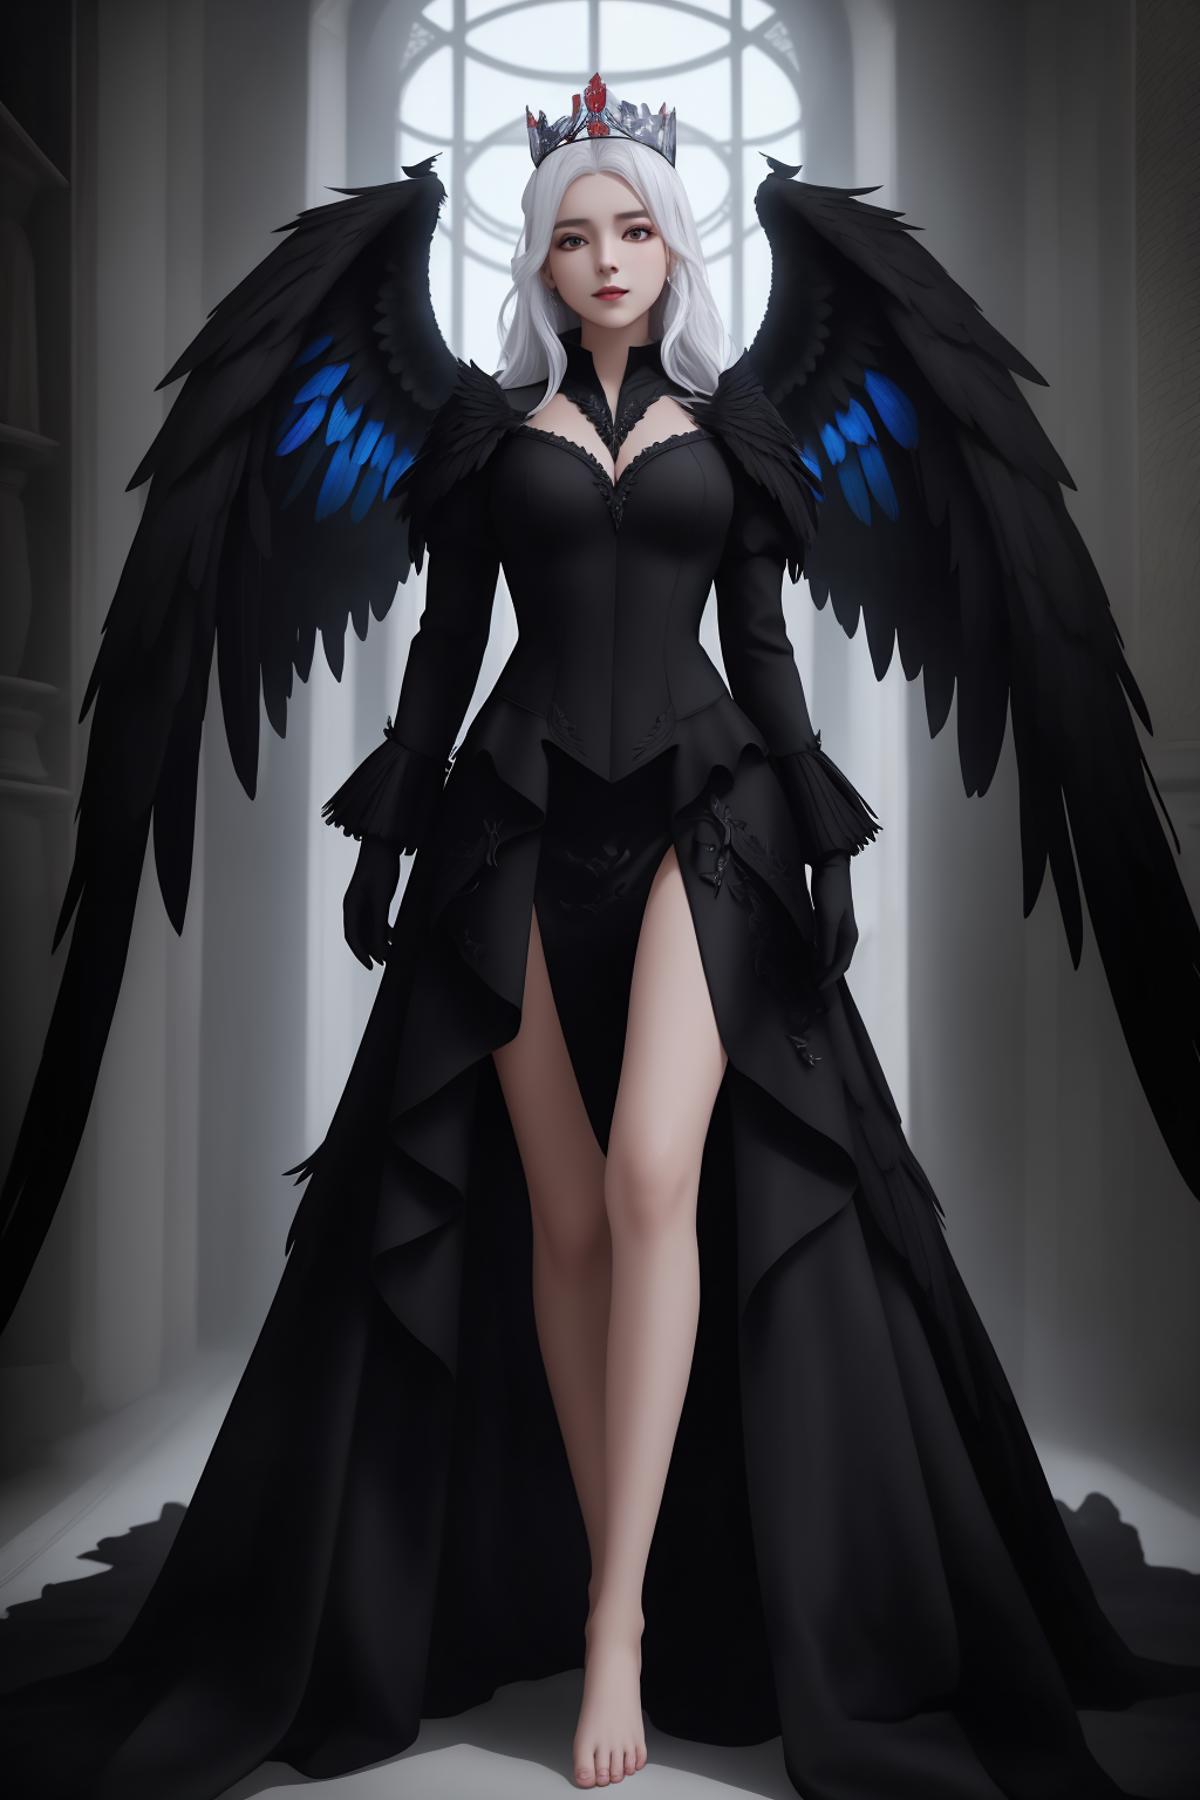 Dark Angel image by Kejolong